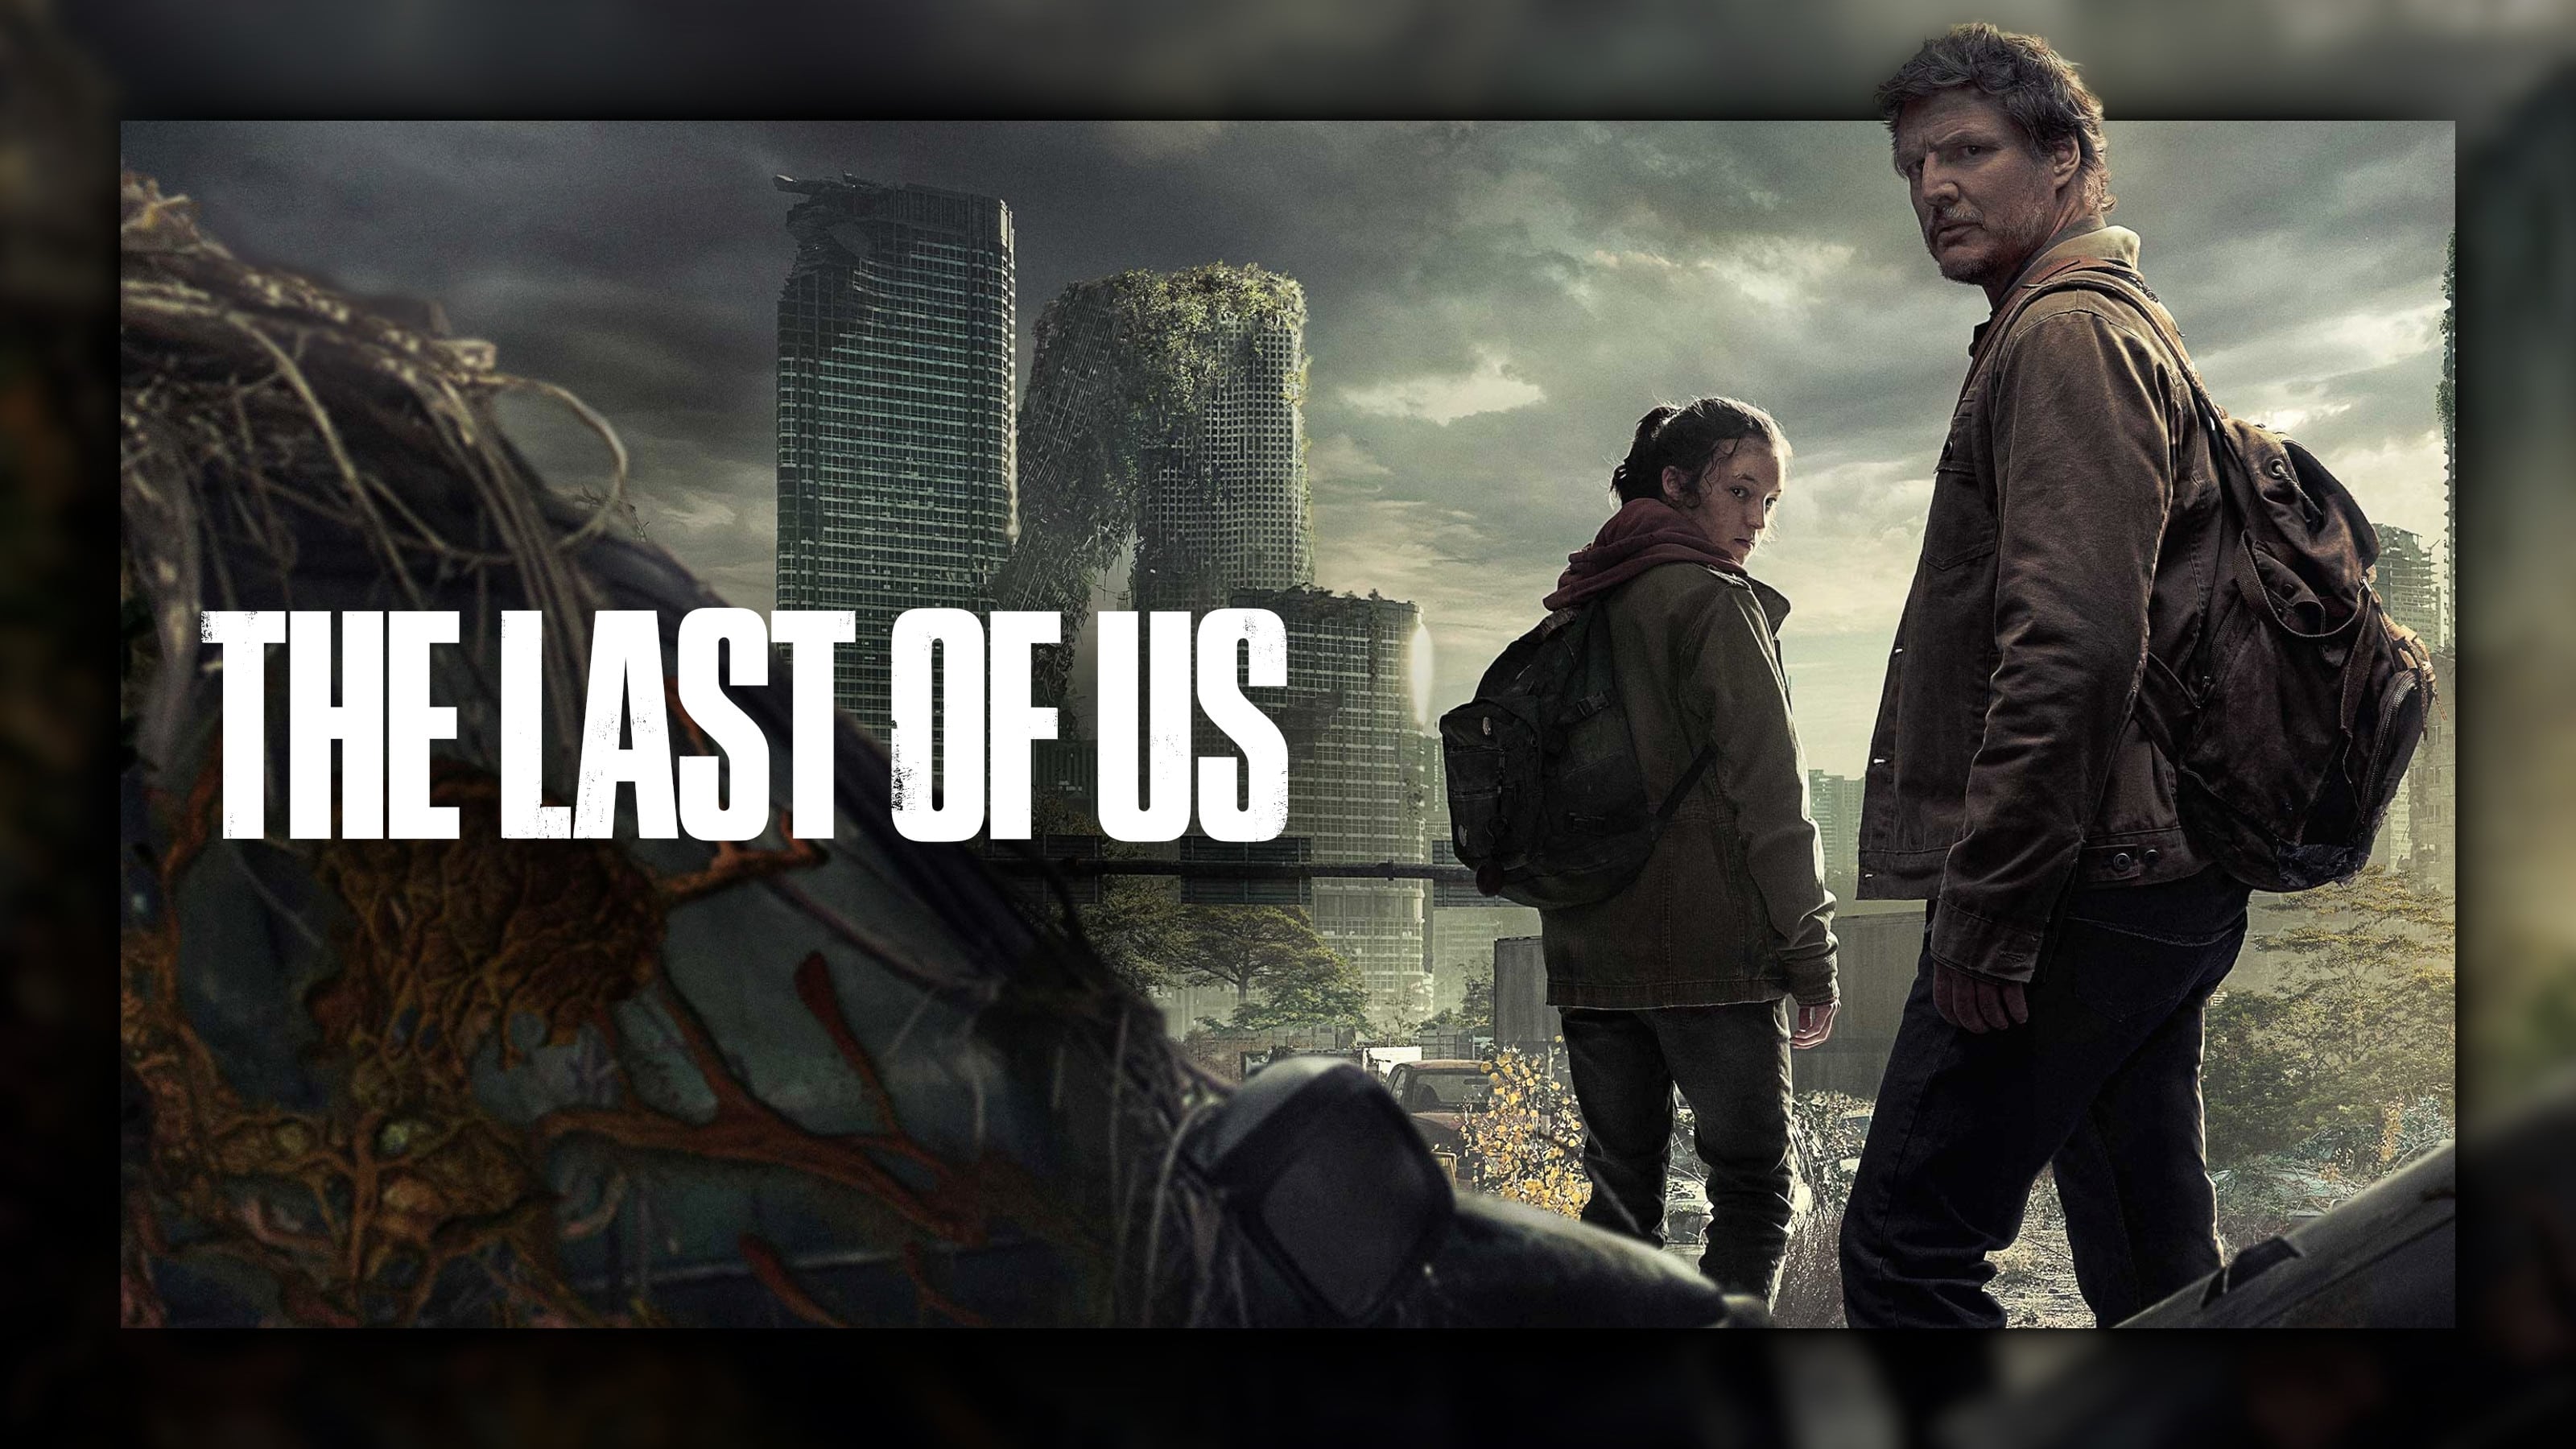 The Last of Us - Season 1 Episode 7